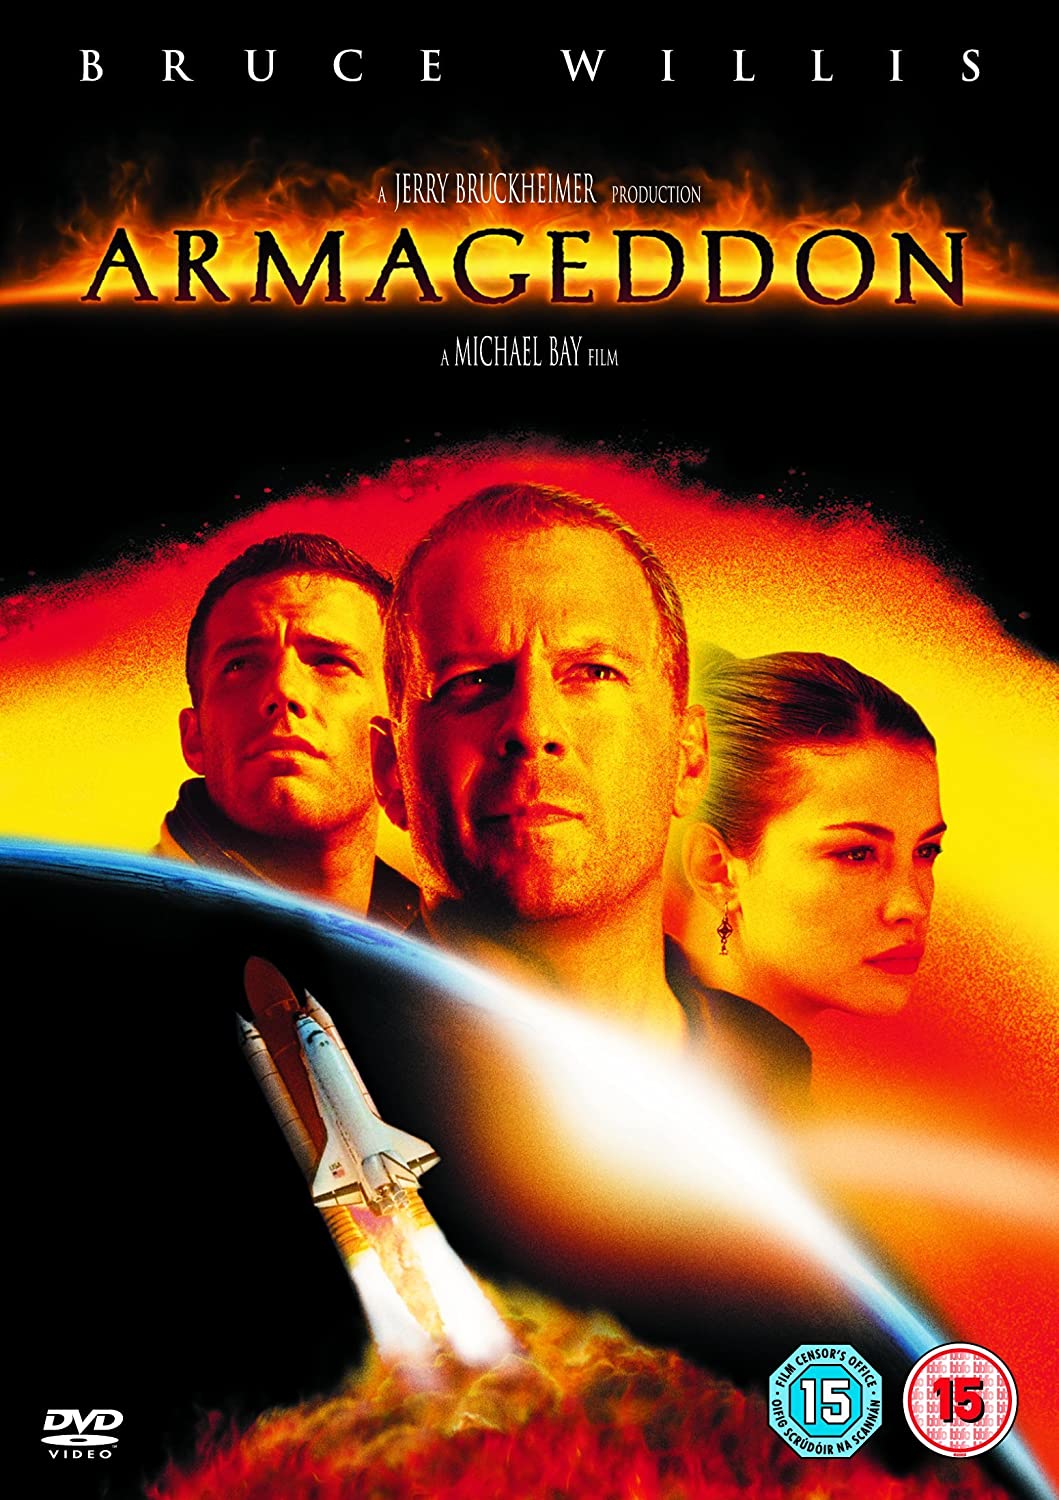 Armageddon - Action/Sci-fi [DVD]